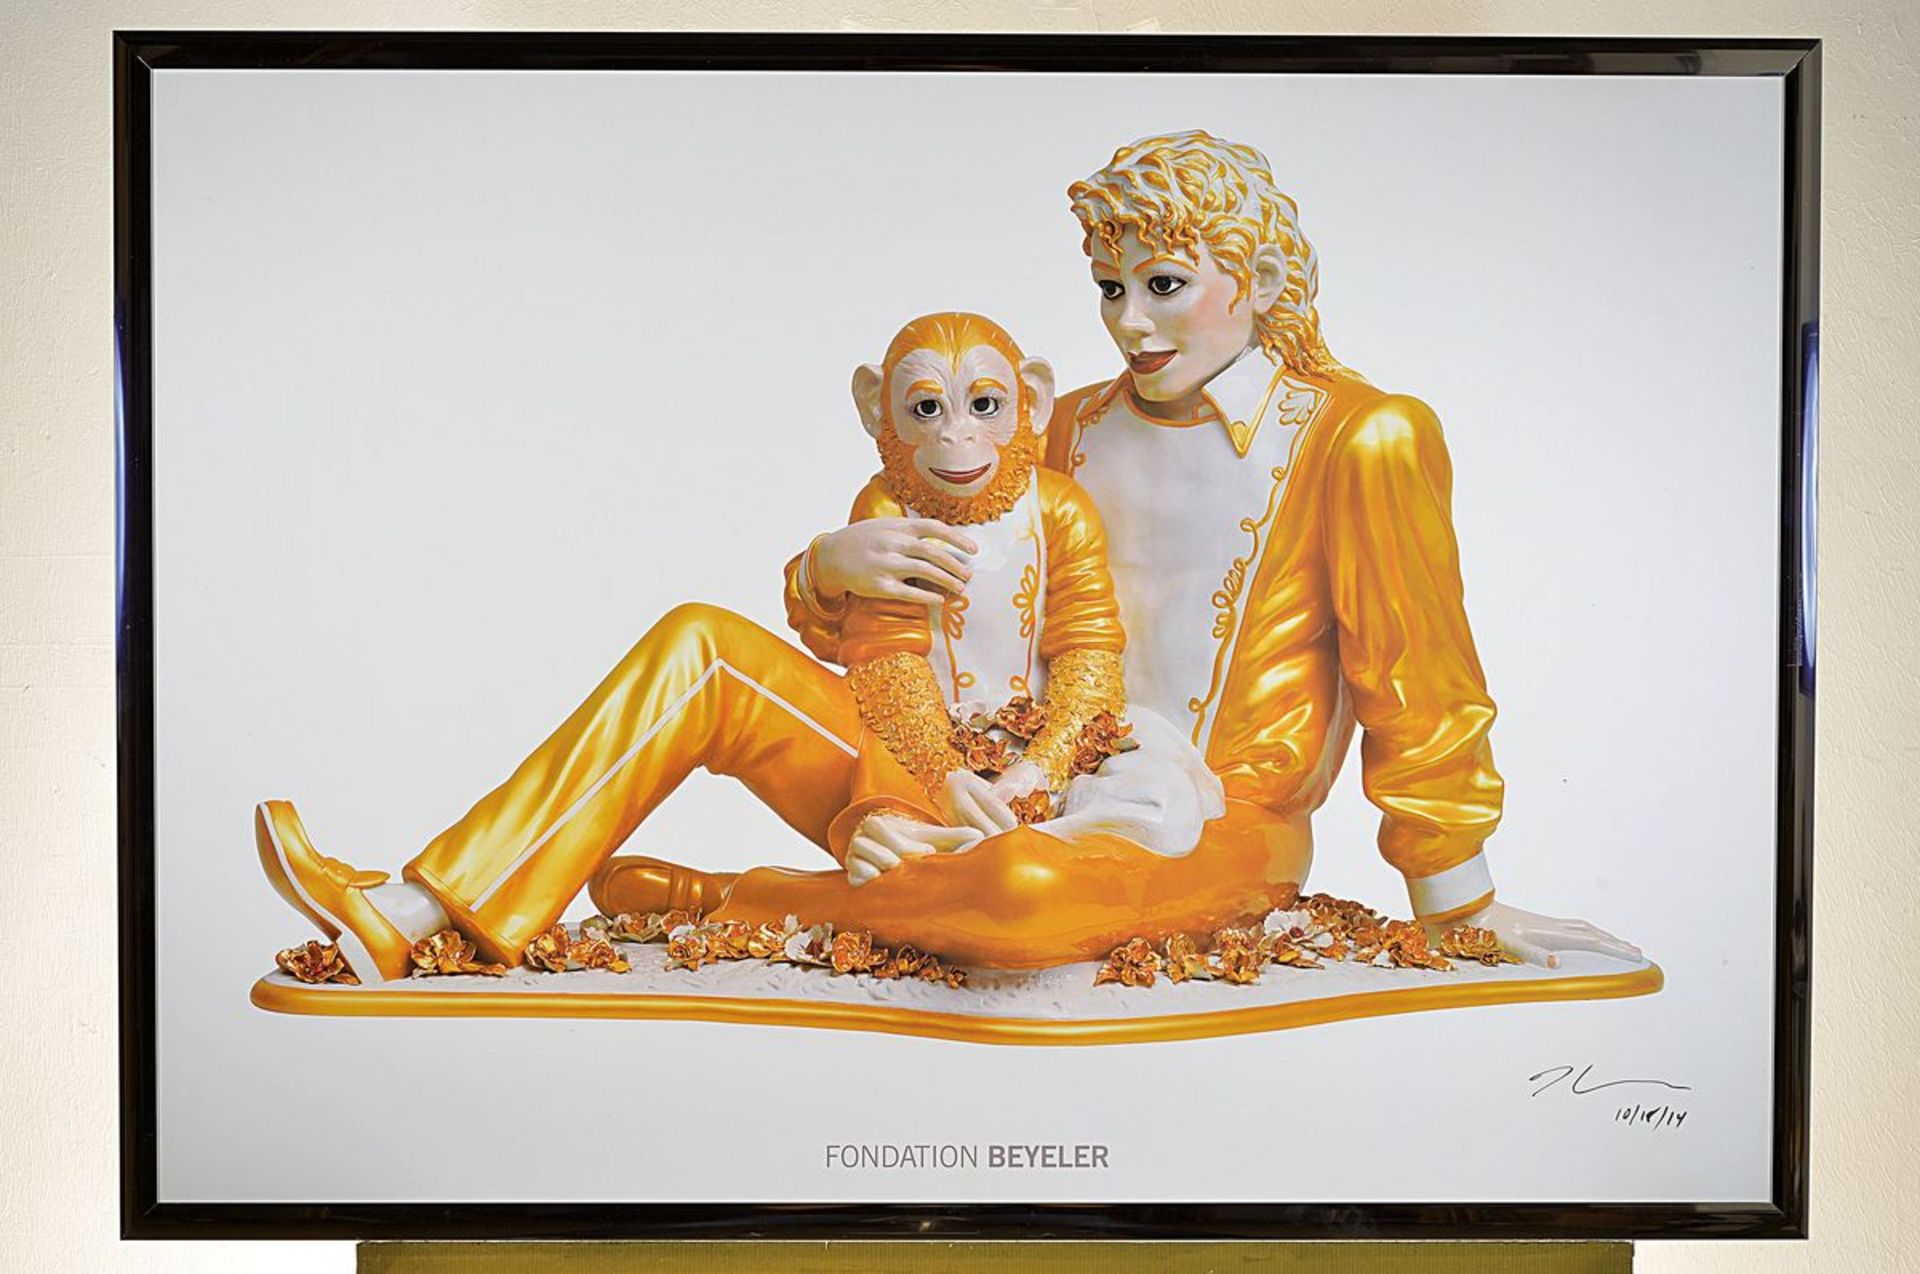 Jeff Koons, born 1955, # "Michael Jackson and Bubbles #", Fondation Beyeler, offset lithograph, - Bild 3 aus 3